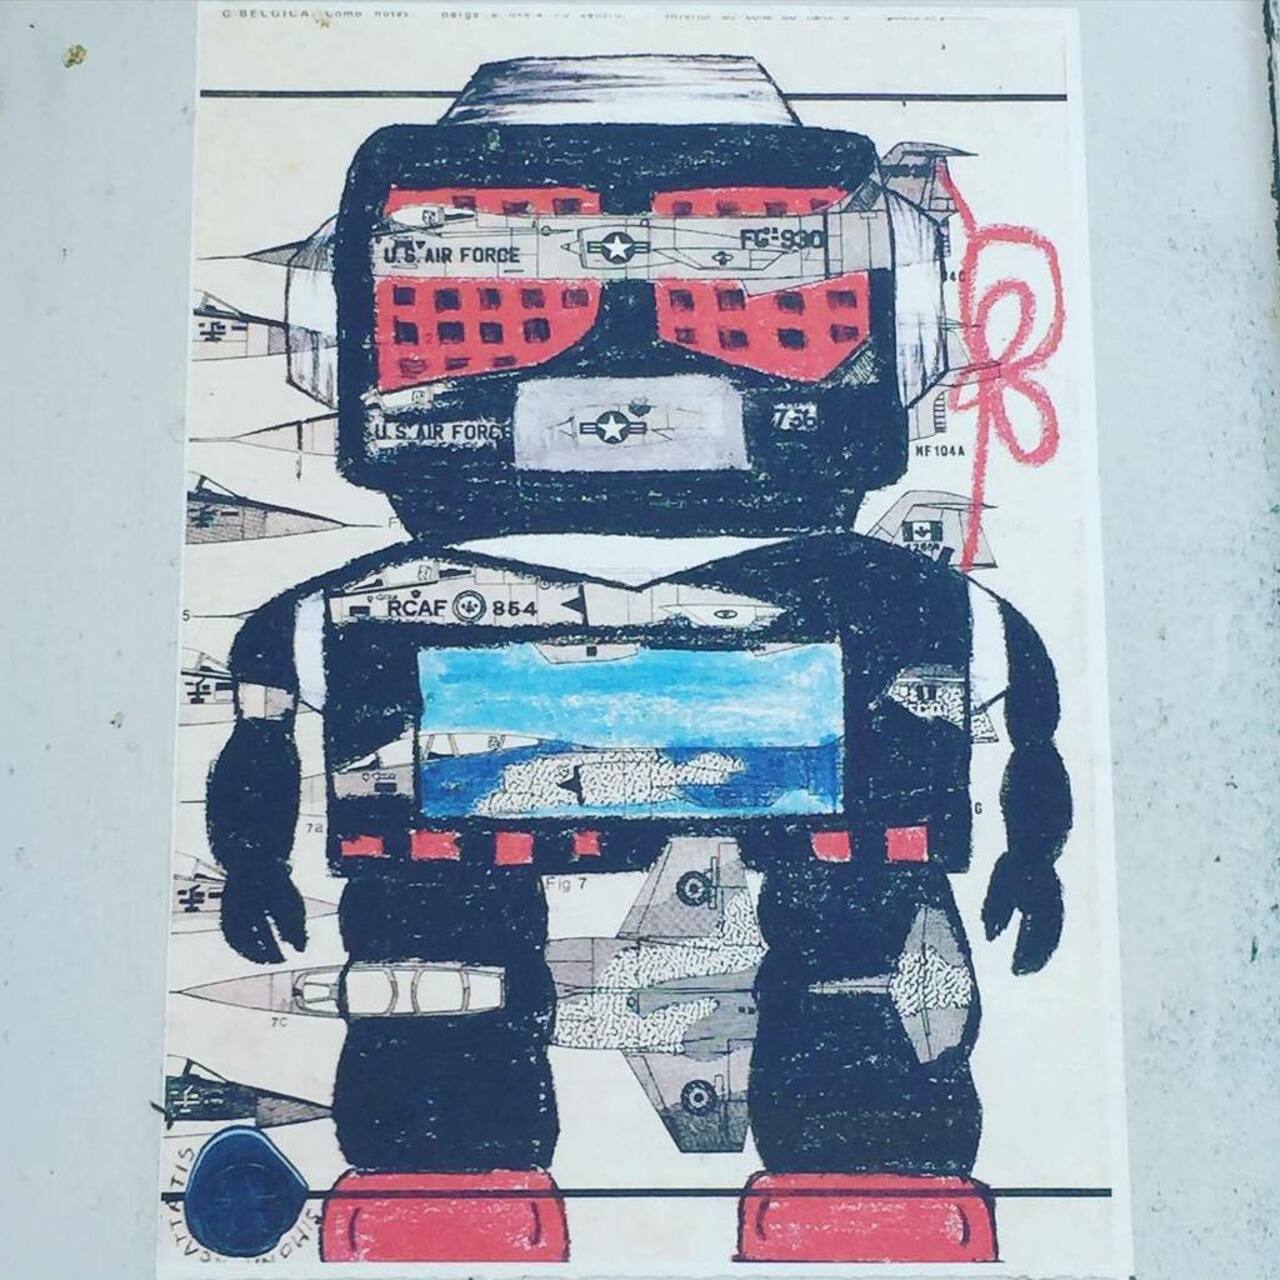 RT @Otherbots: #Lisbonne #Lisboa #portugal #robot #graffiti #graffitiart #urbanart #urban #Streetart #vandalism by vesna72 http://t.co/MH2DtYL6ZO